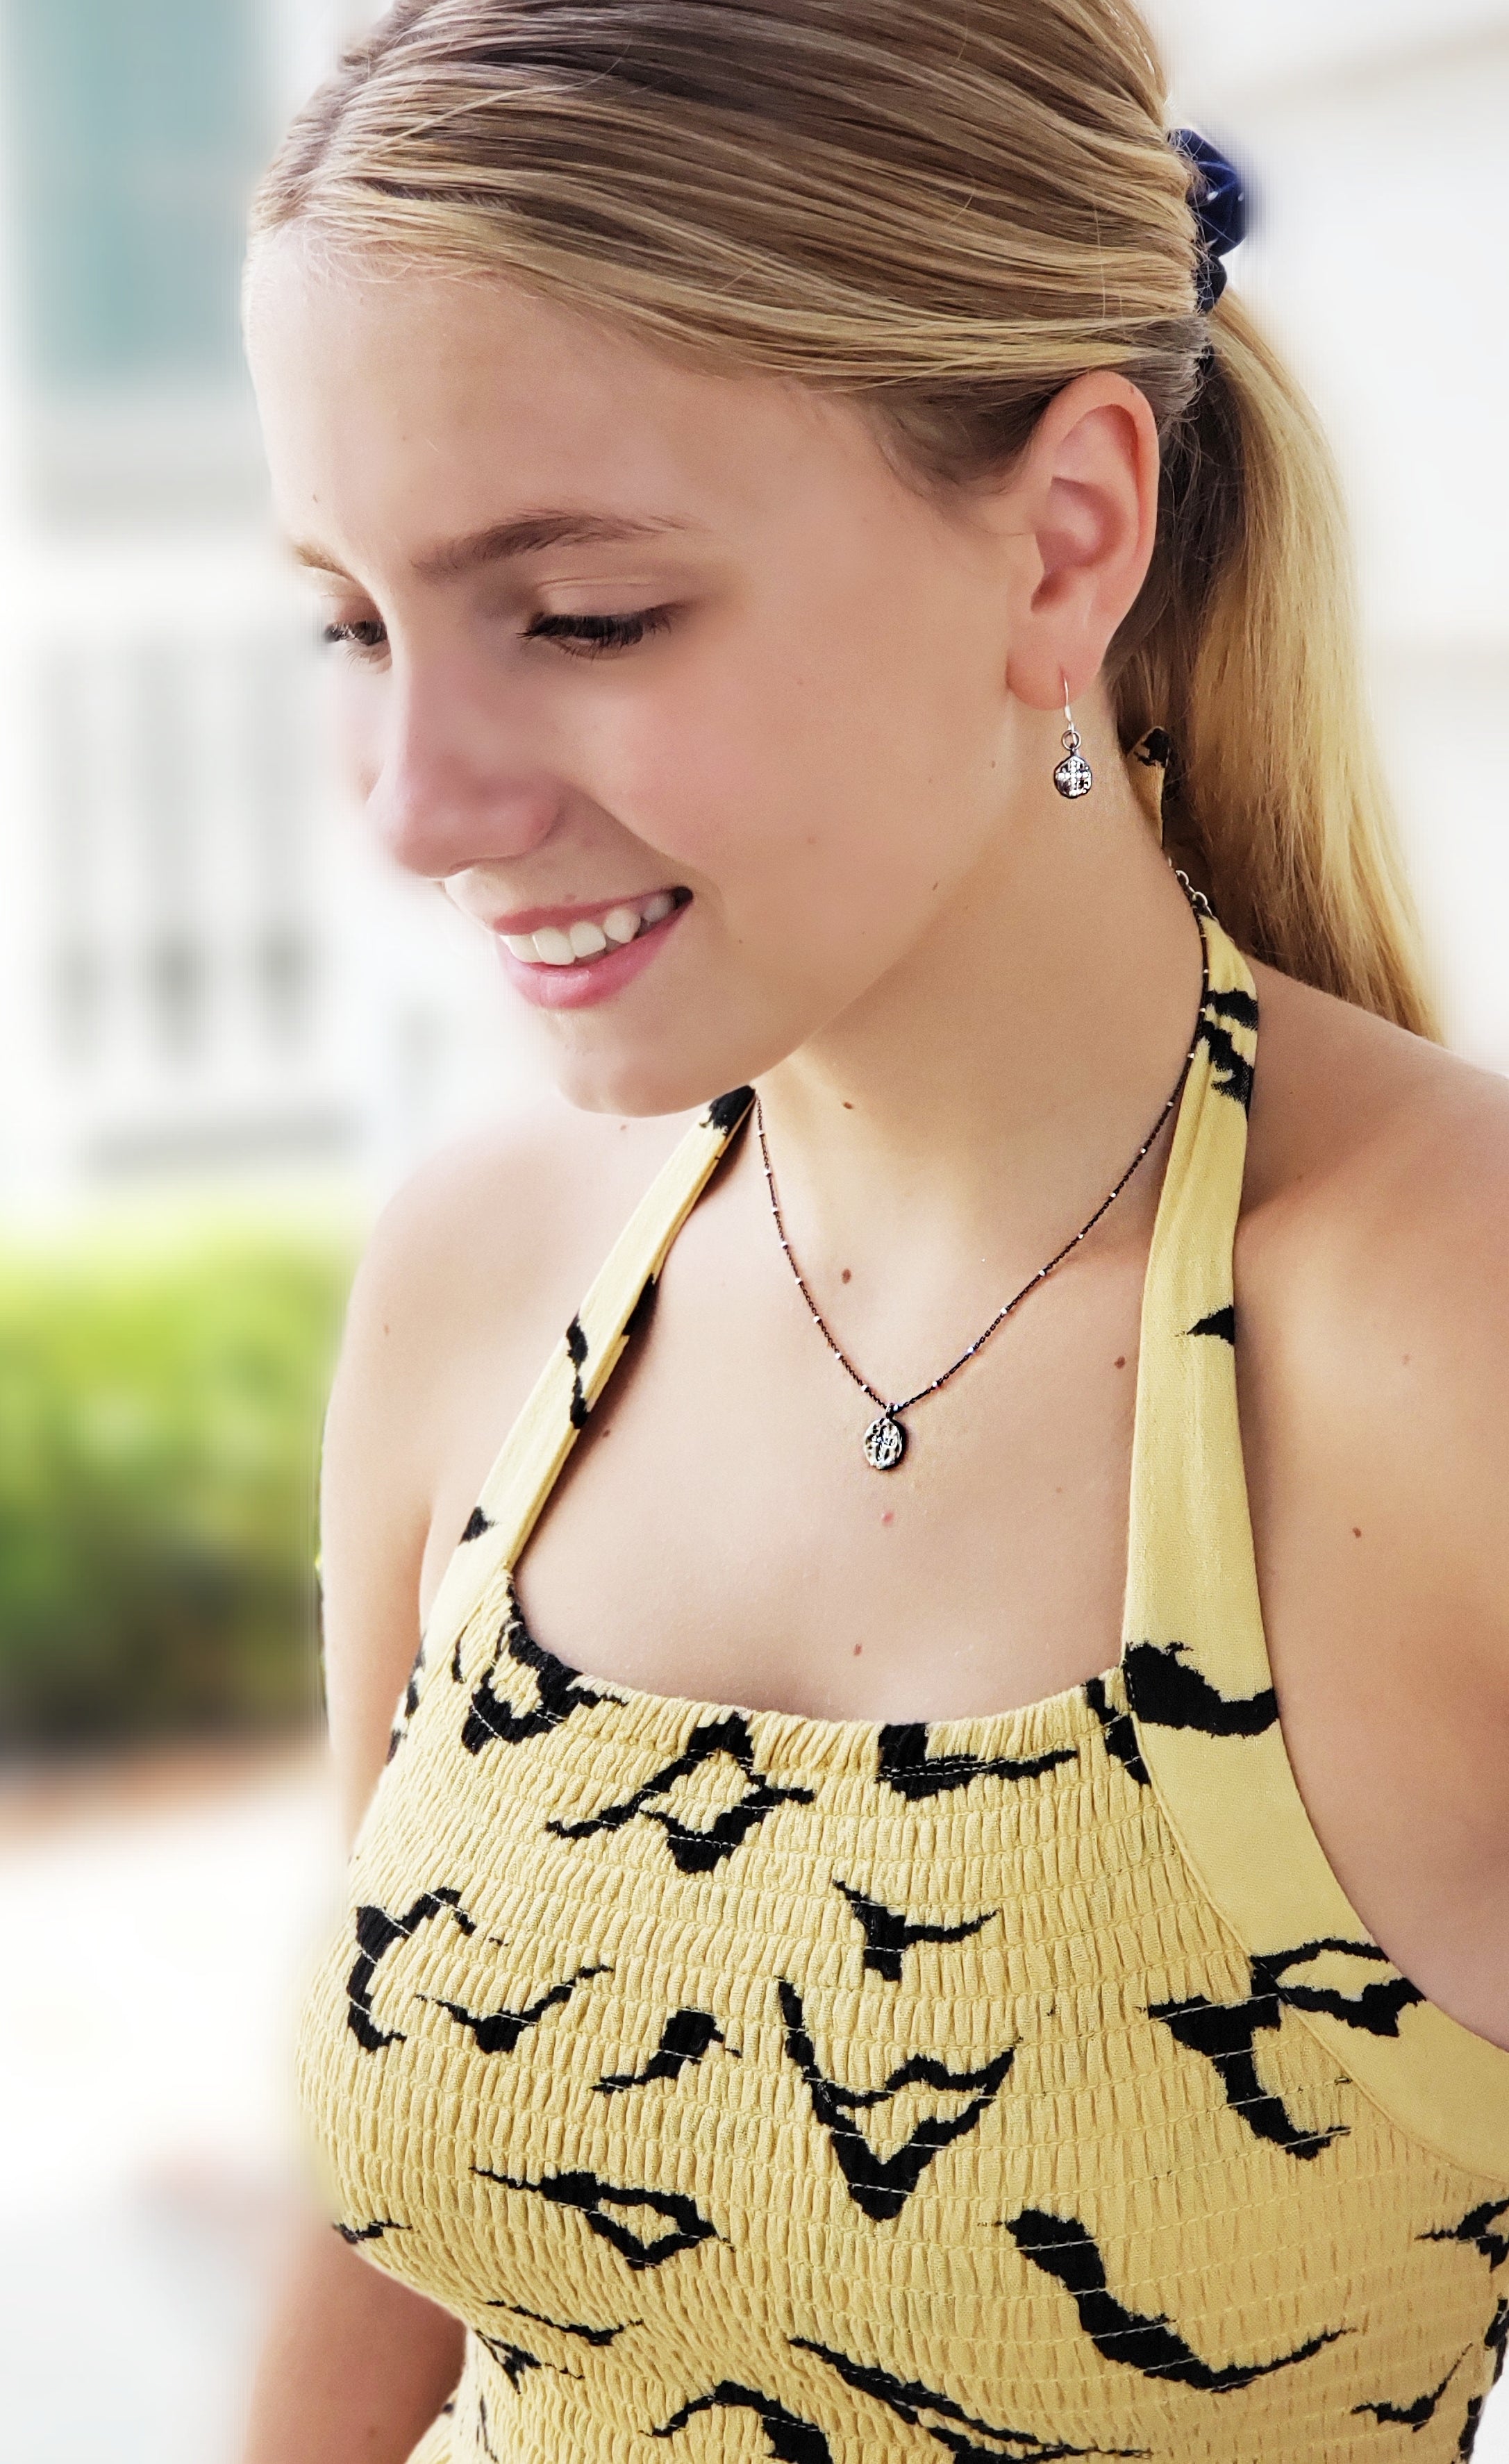 Chloe Earrings